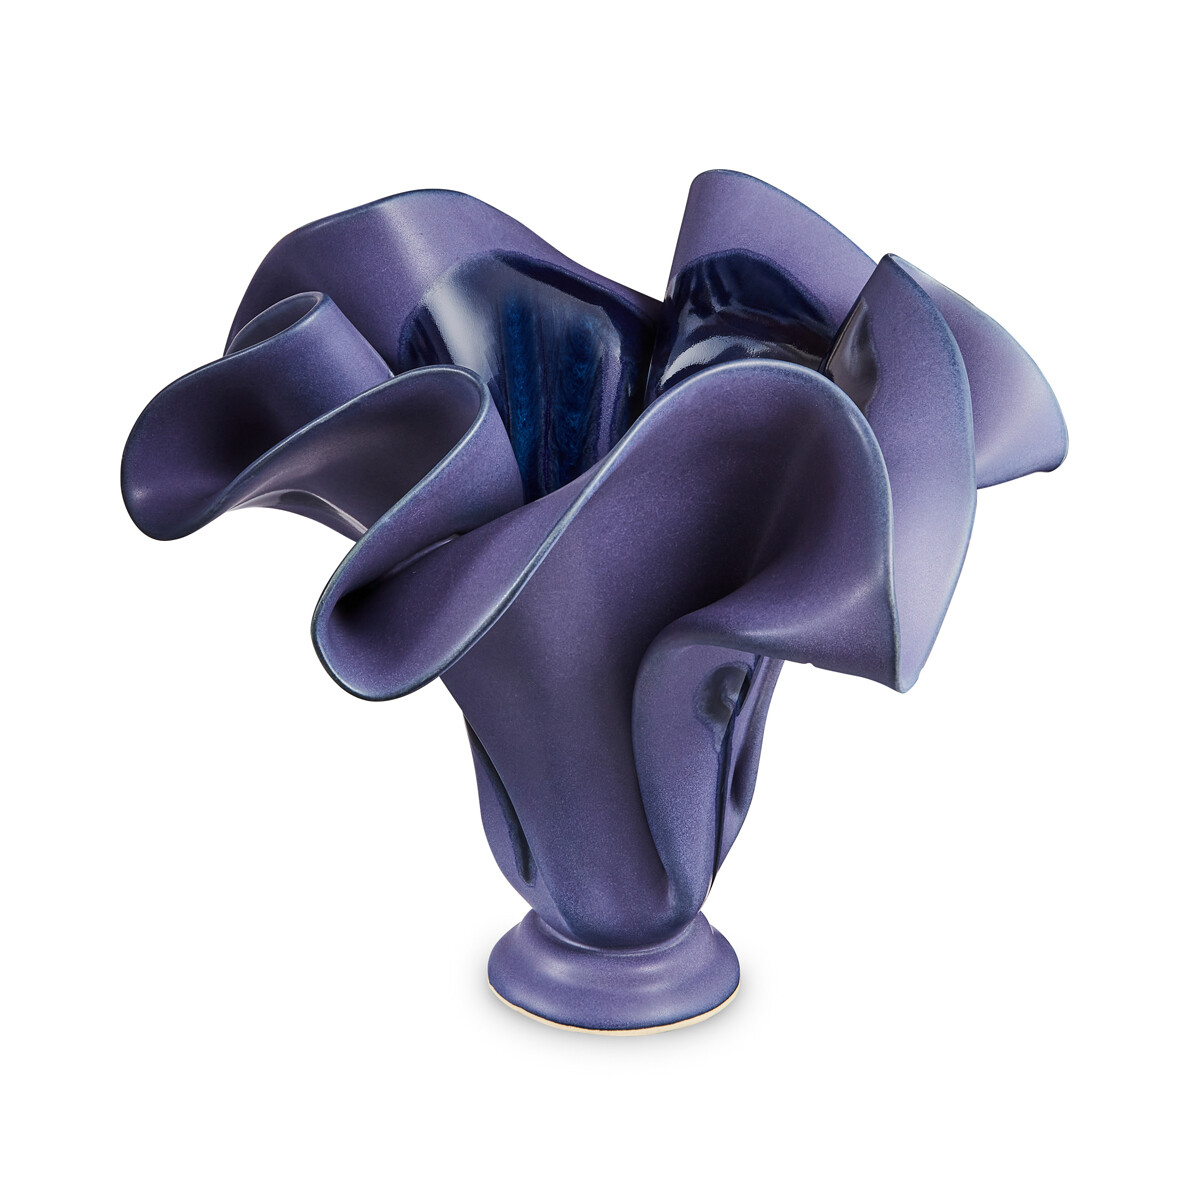 Hilborn Sculpted Vase- Periwinkle Blue